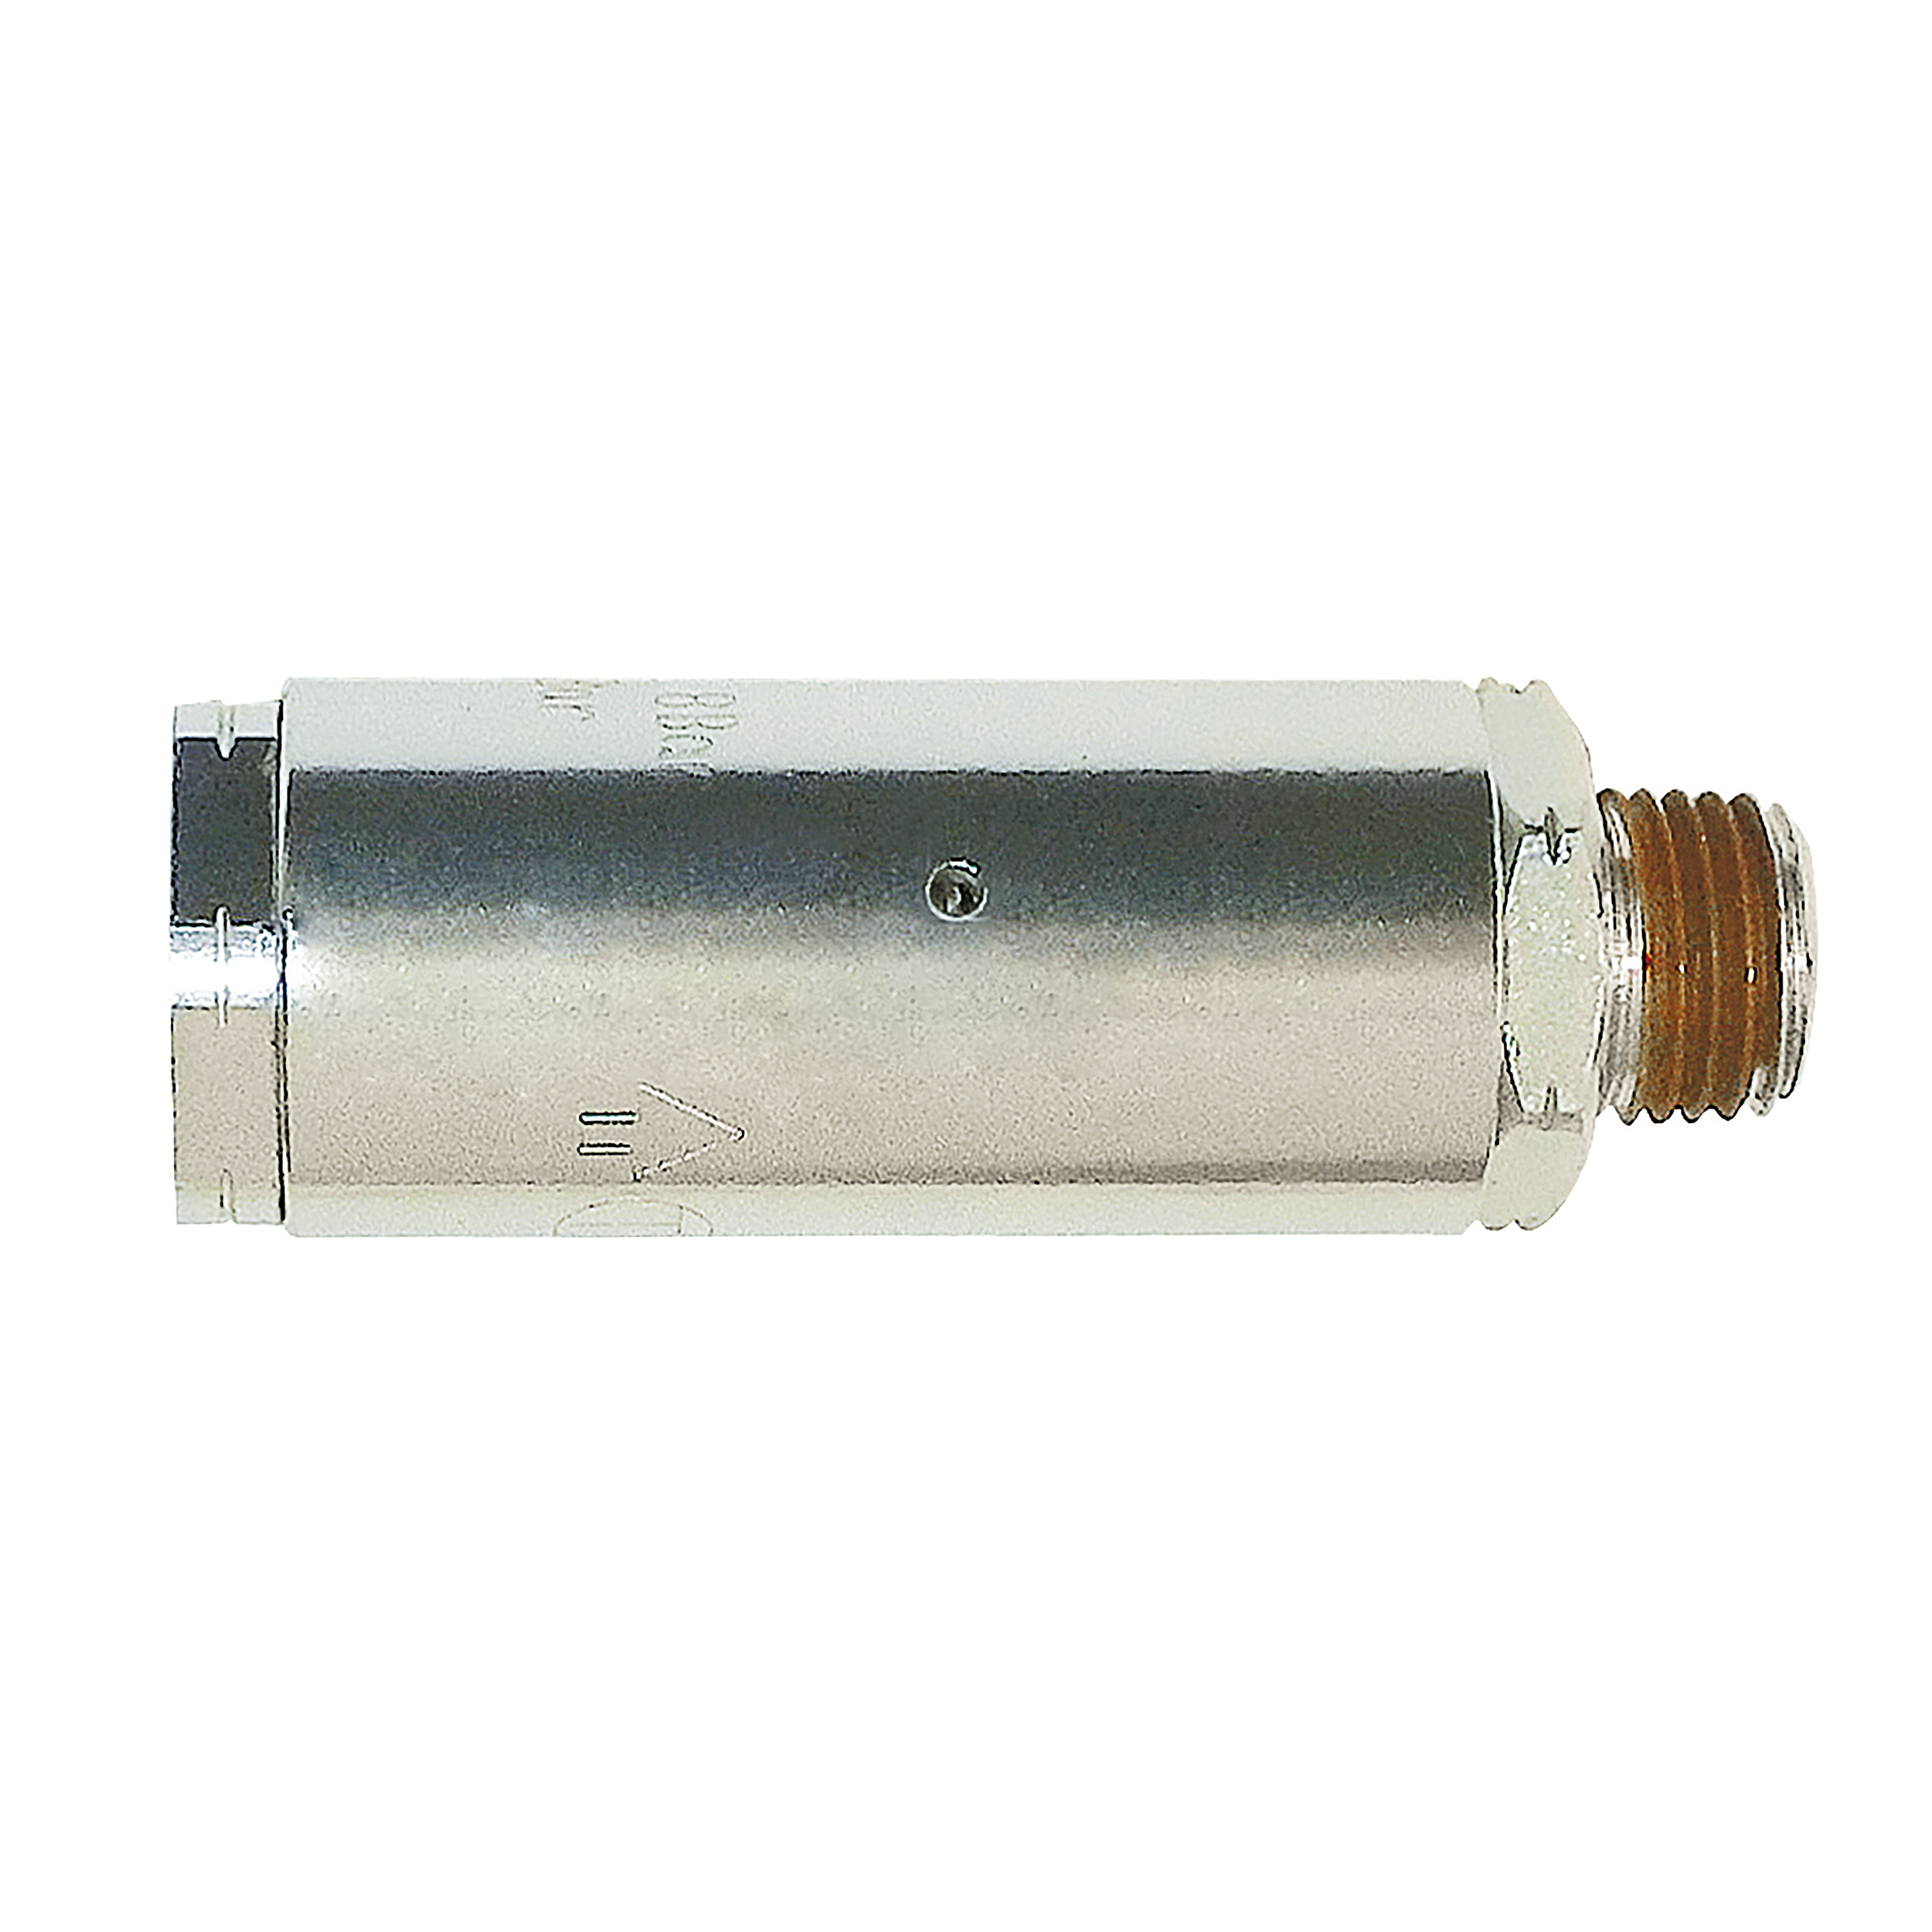 Inline pressure regulator, 87 psi preset, G¼, Ø21.8 mm, l: 62.7 mm, max. pressure 232 psi, min. pressure 116 psi, aluminum, 41 g